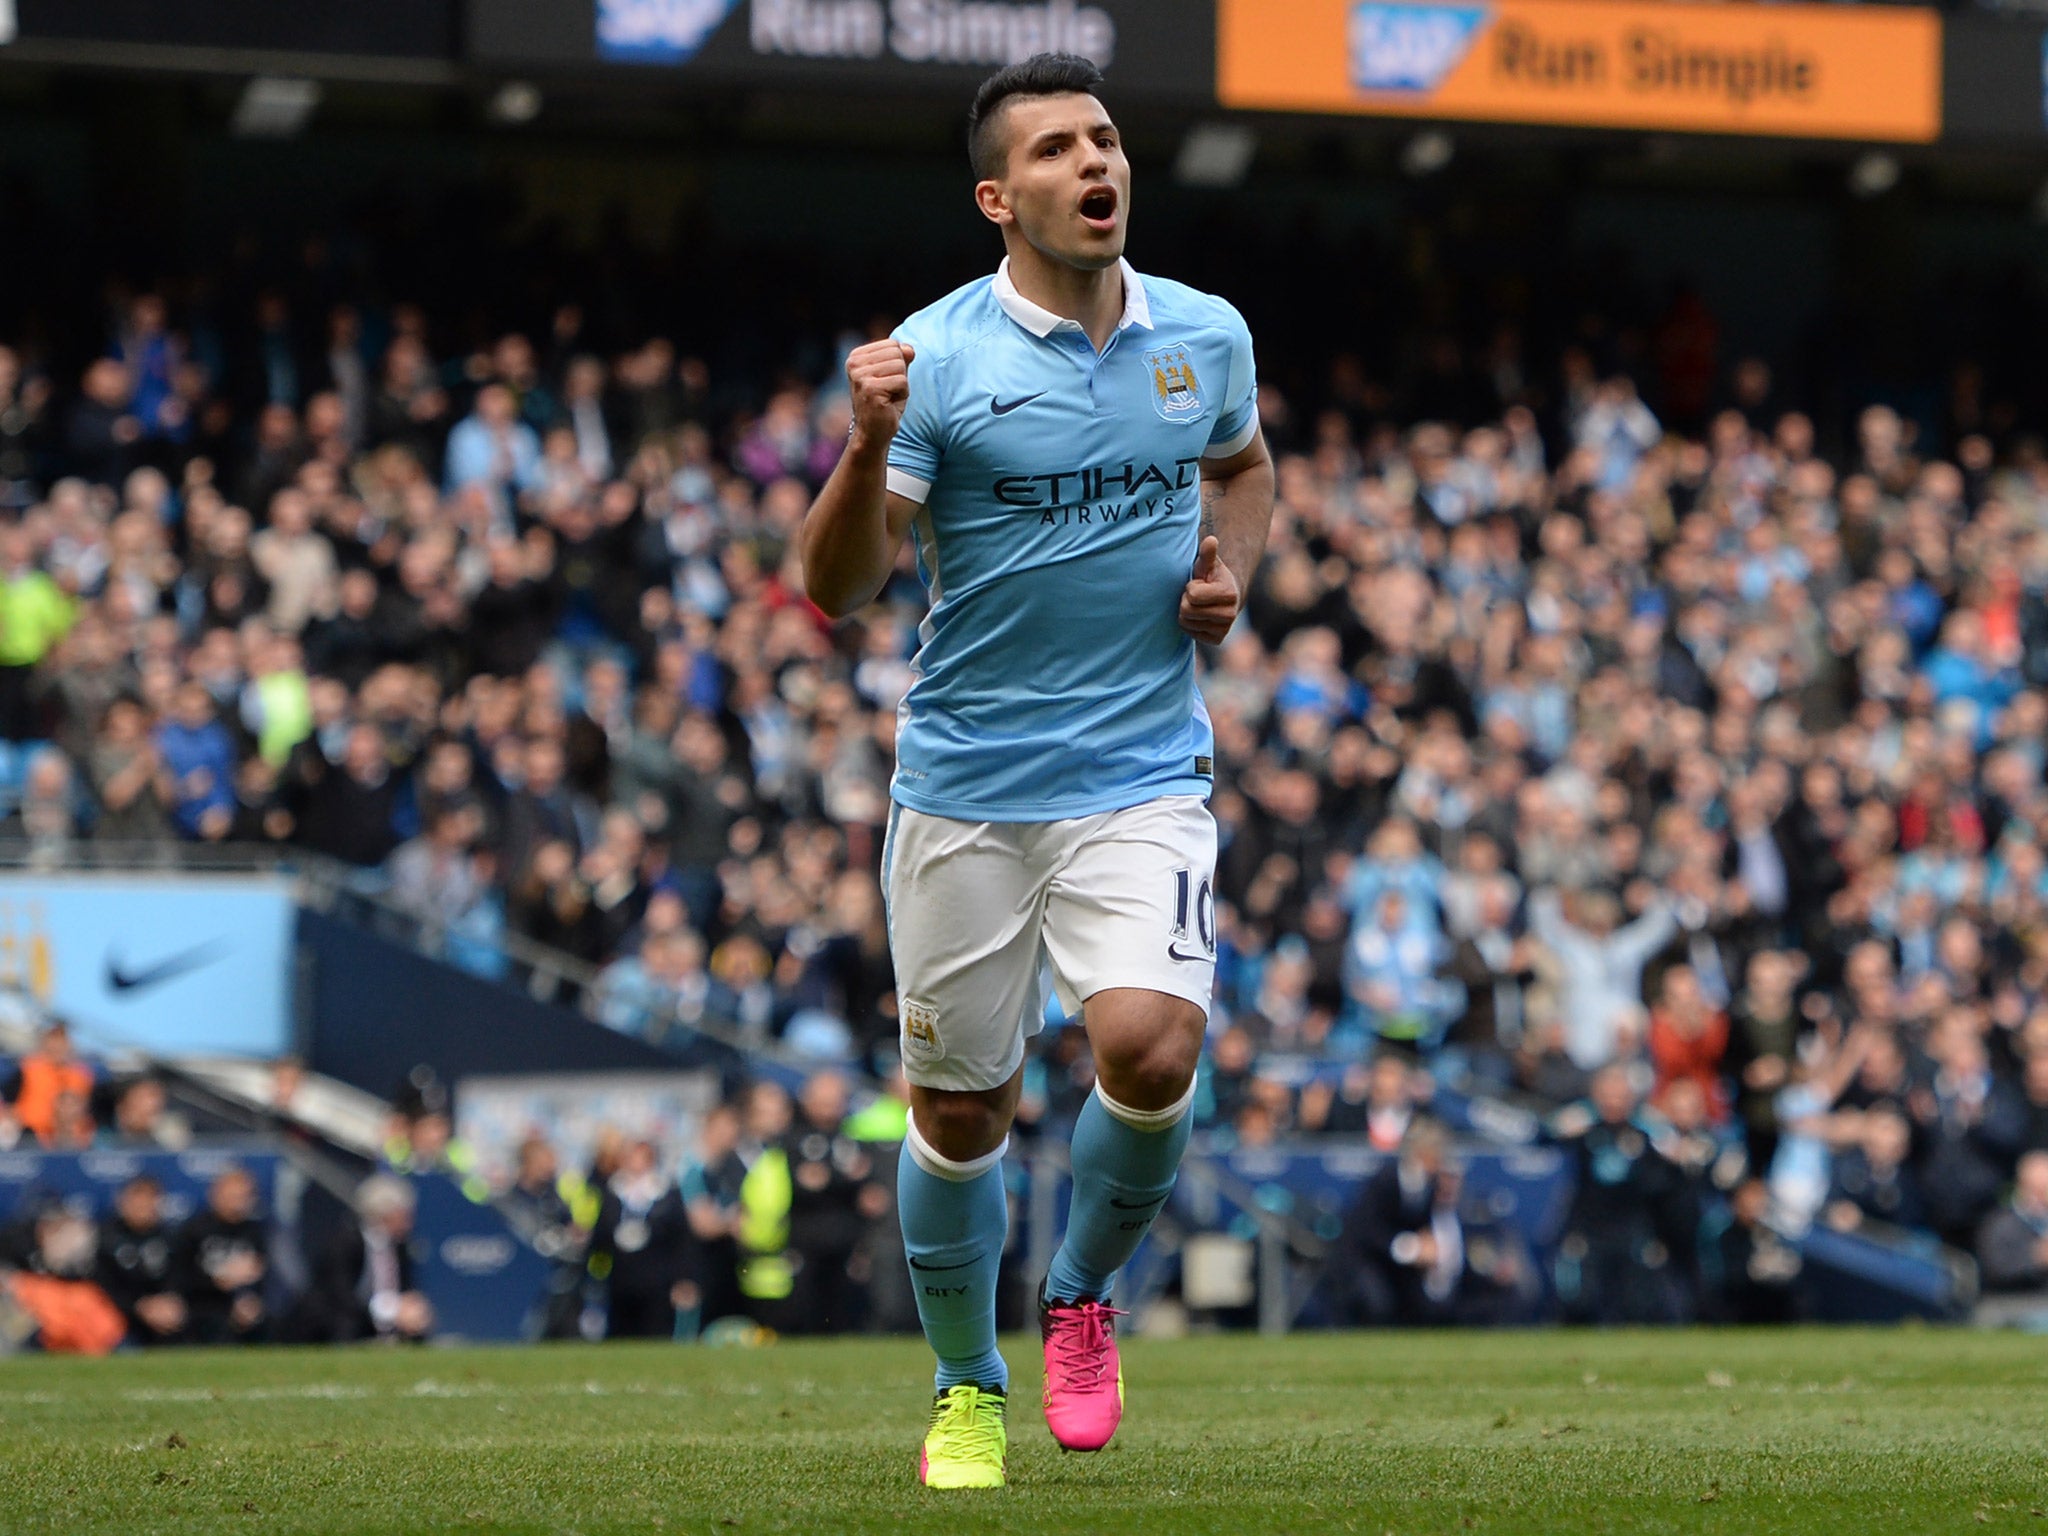 Sergio Aguero again shone brightest in a mixed campaign for Manchester City